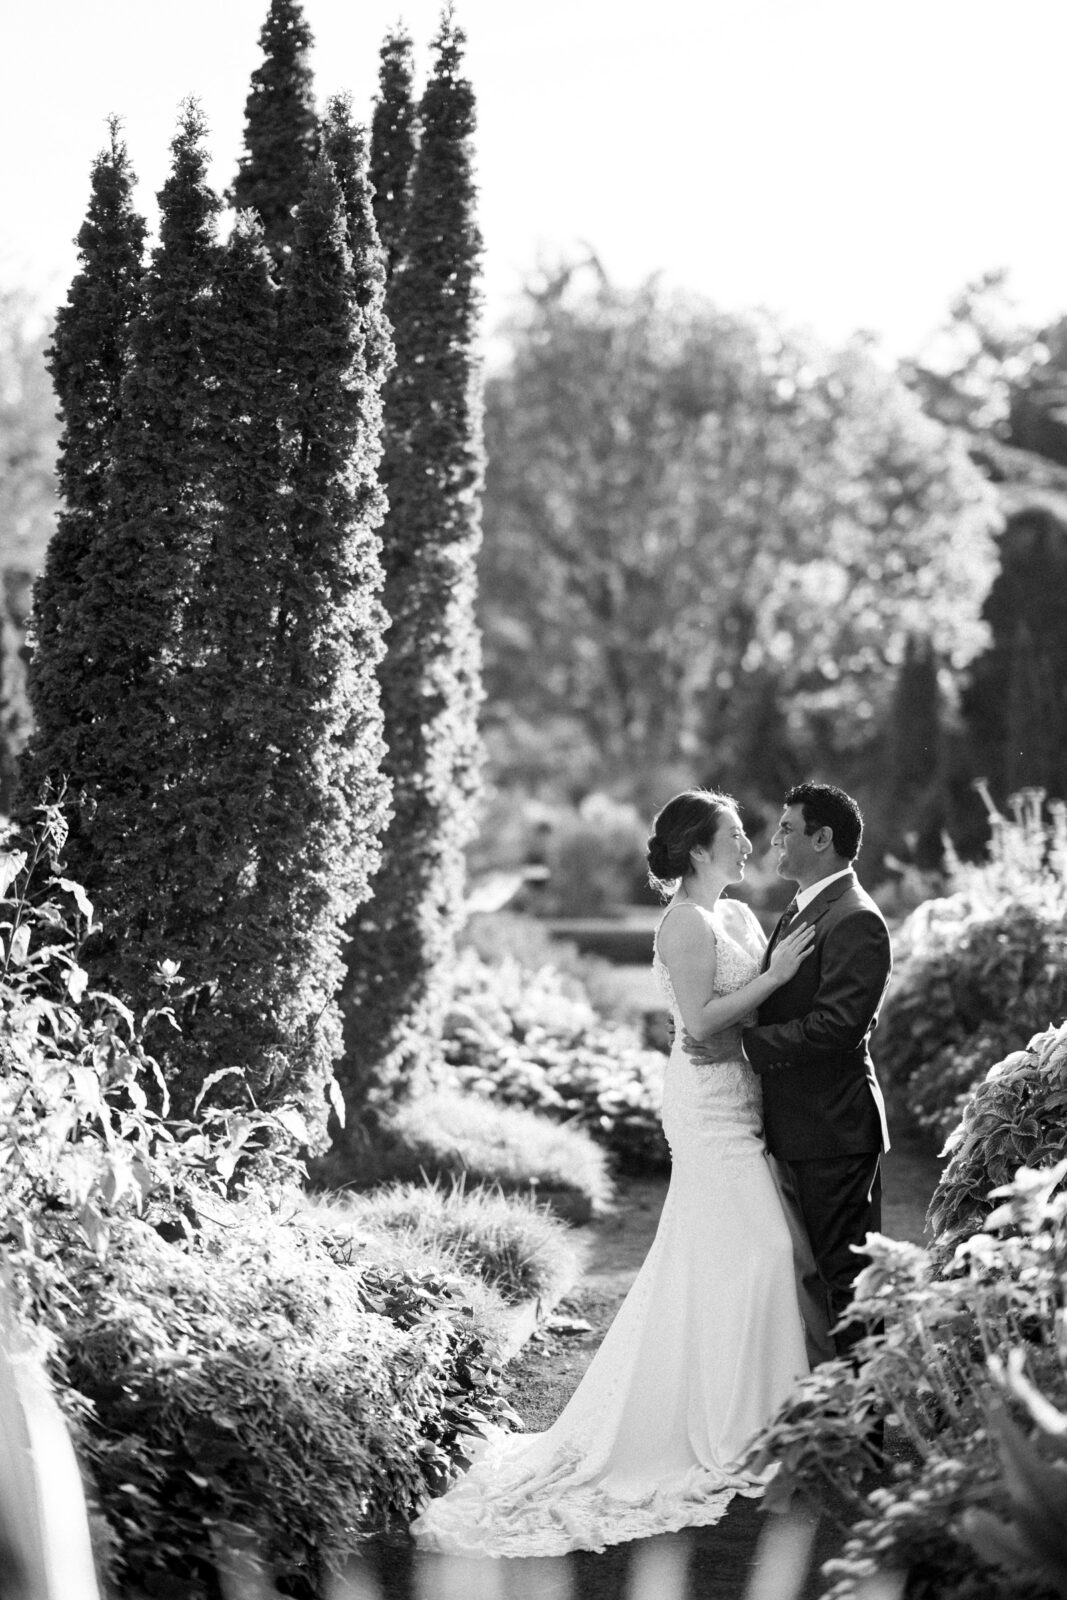 jc raulston arboretum wedding - holly & sut